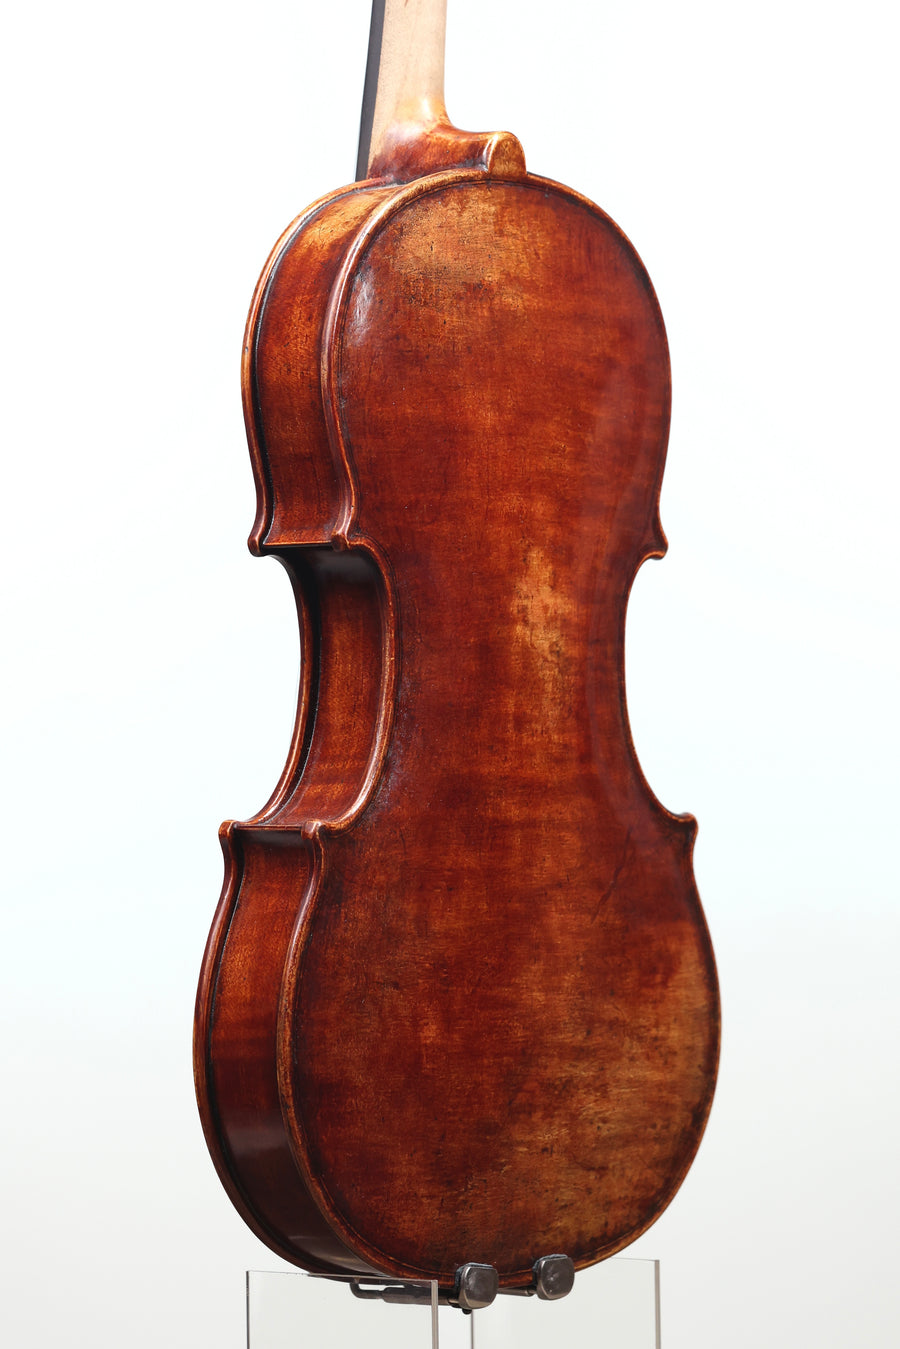 A Modern American Violin by Aaron Work, 2021.